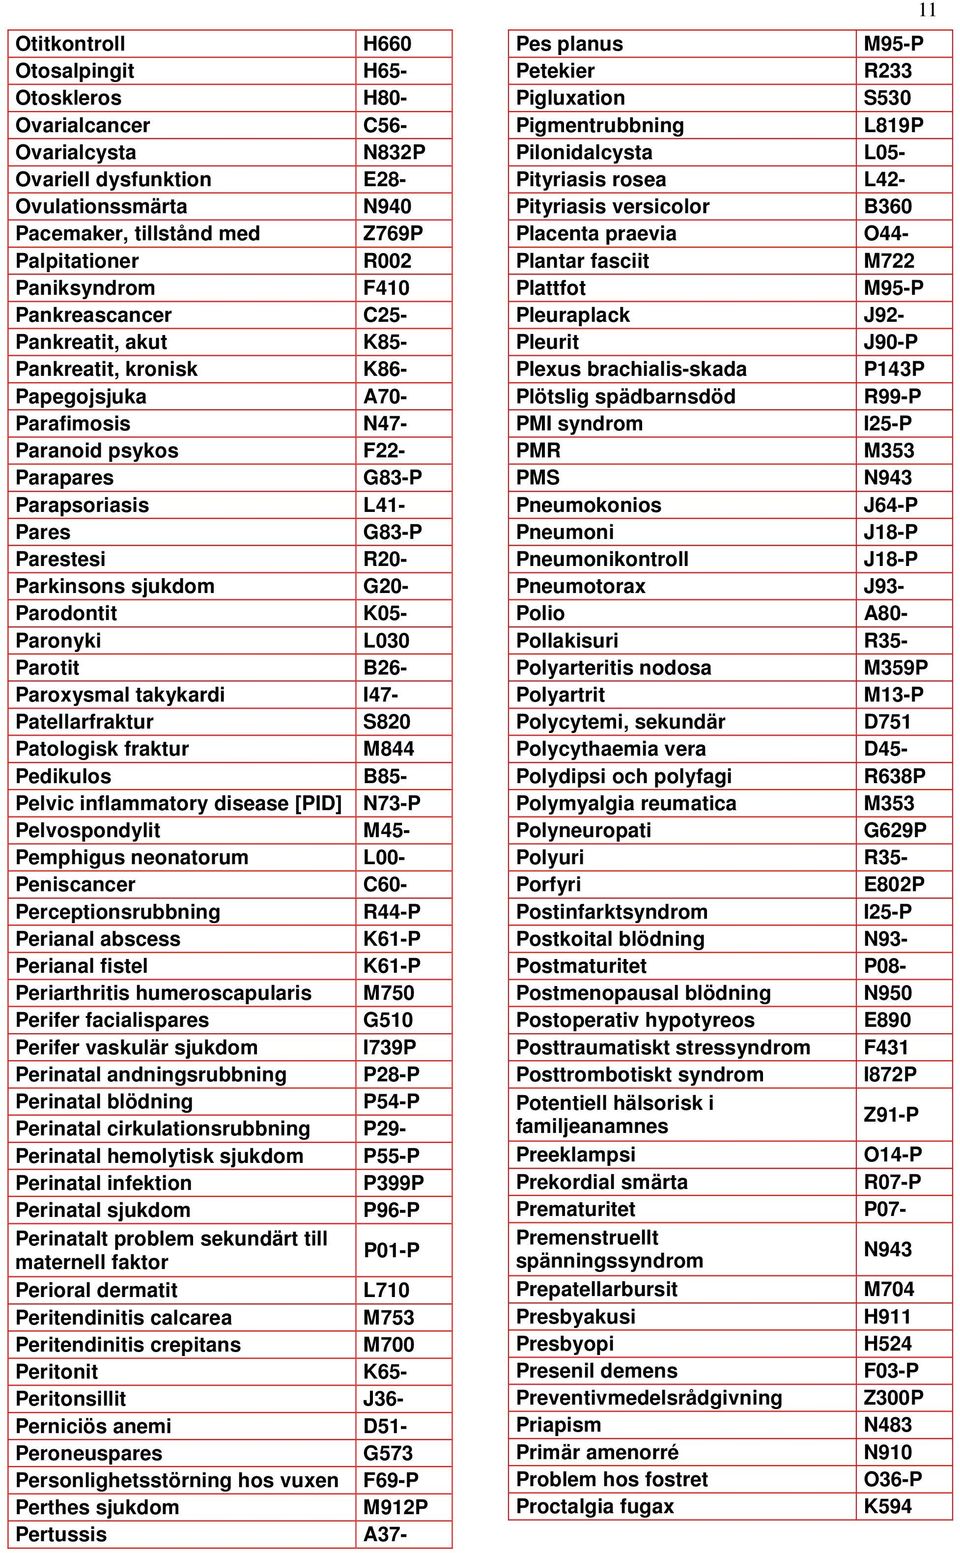 R20- Parkinsons sjukdom G20- Parodontit K05- Paronyki L030 Parotit B26- Paroxysmal takykardi I47- Patellarfraktur S820 Patologisk fraktur M844 Pedikulos B85- Pelvic inflammatory disease [PID] N73-P